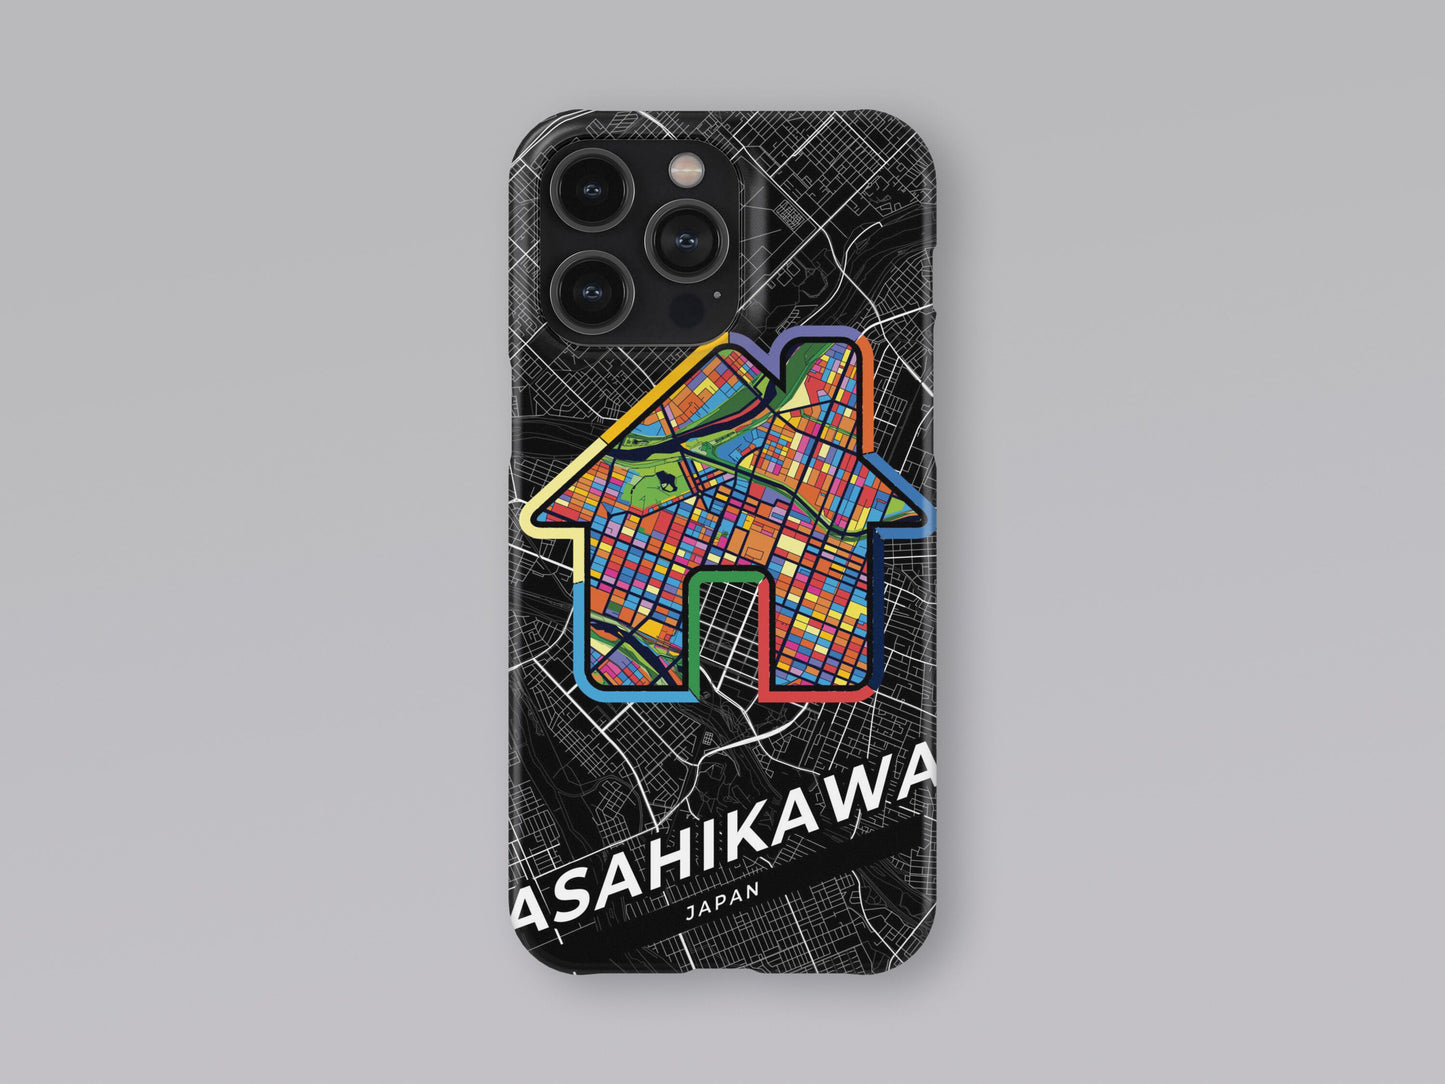 Asahikawa Japan slim phone case with colorful icon. Birthday, wedding or housewarming gift. Couple match cases. 3